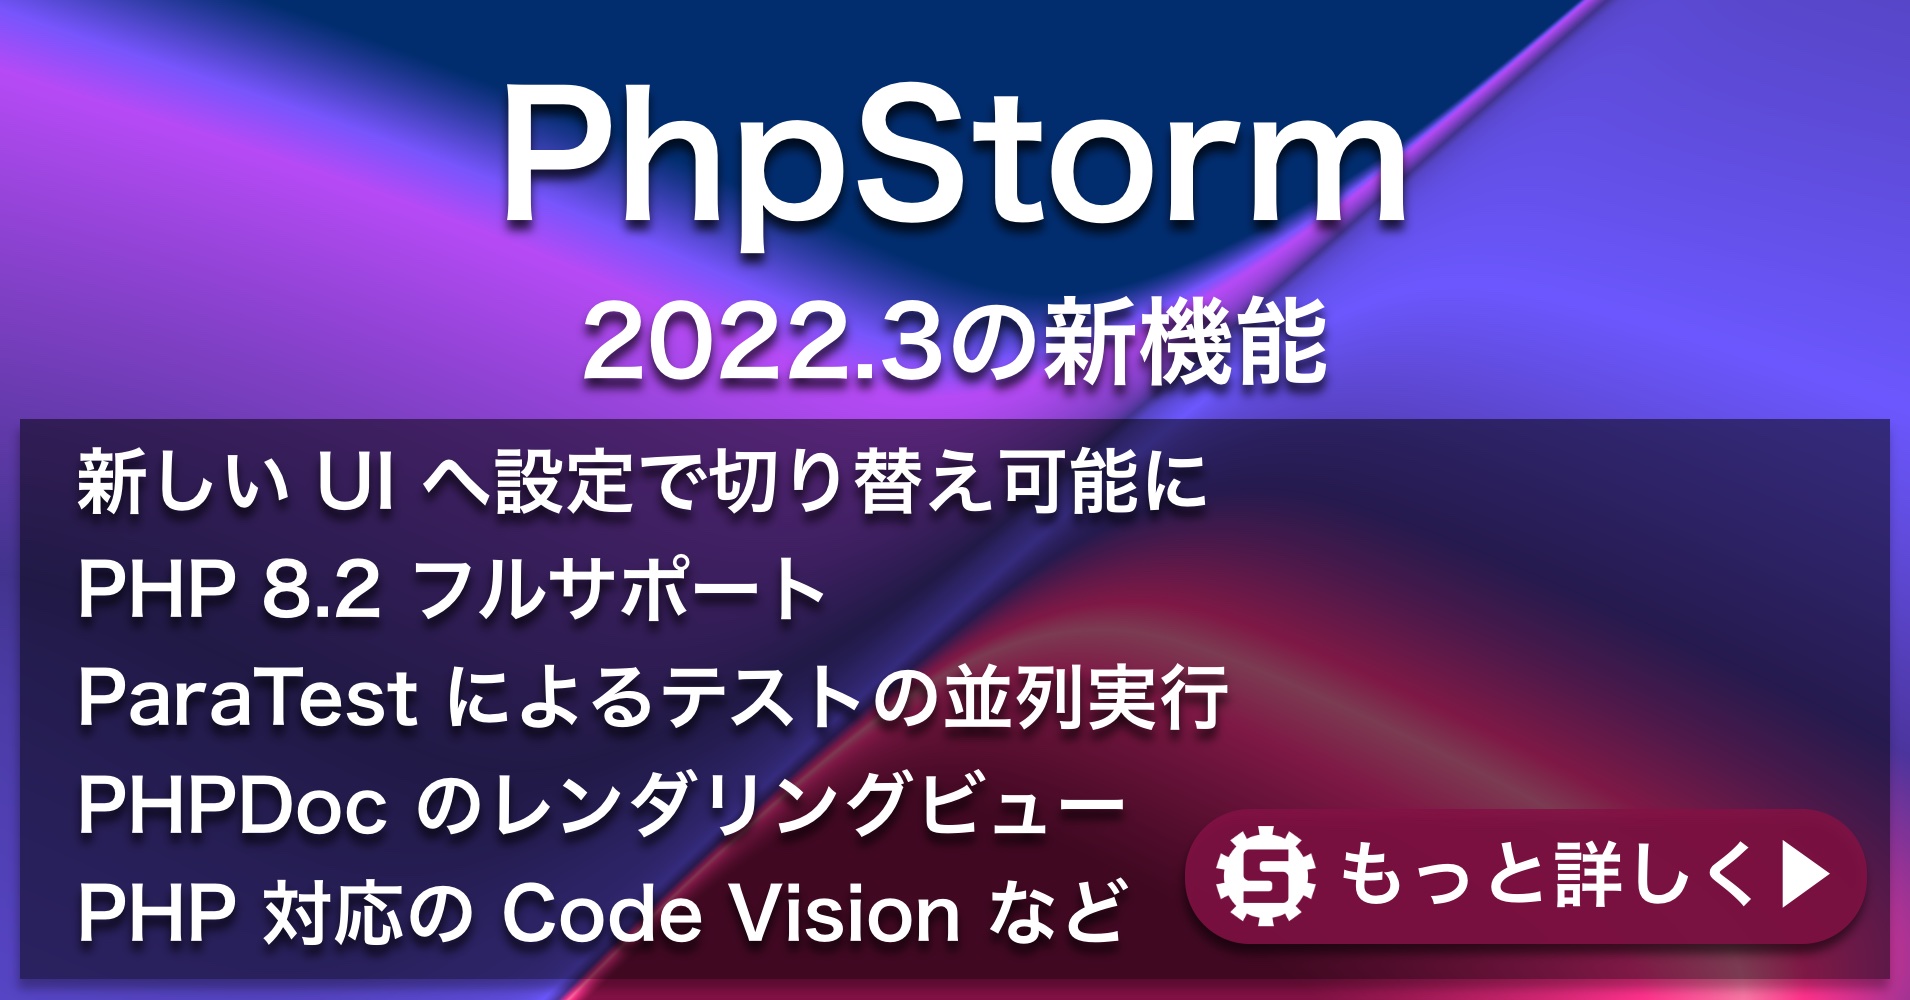 PhpStorm 2022.3の新機能